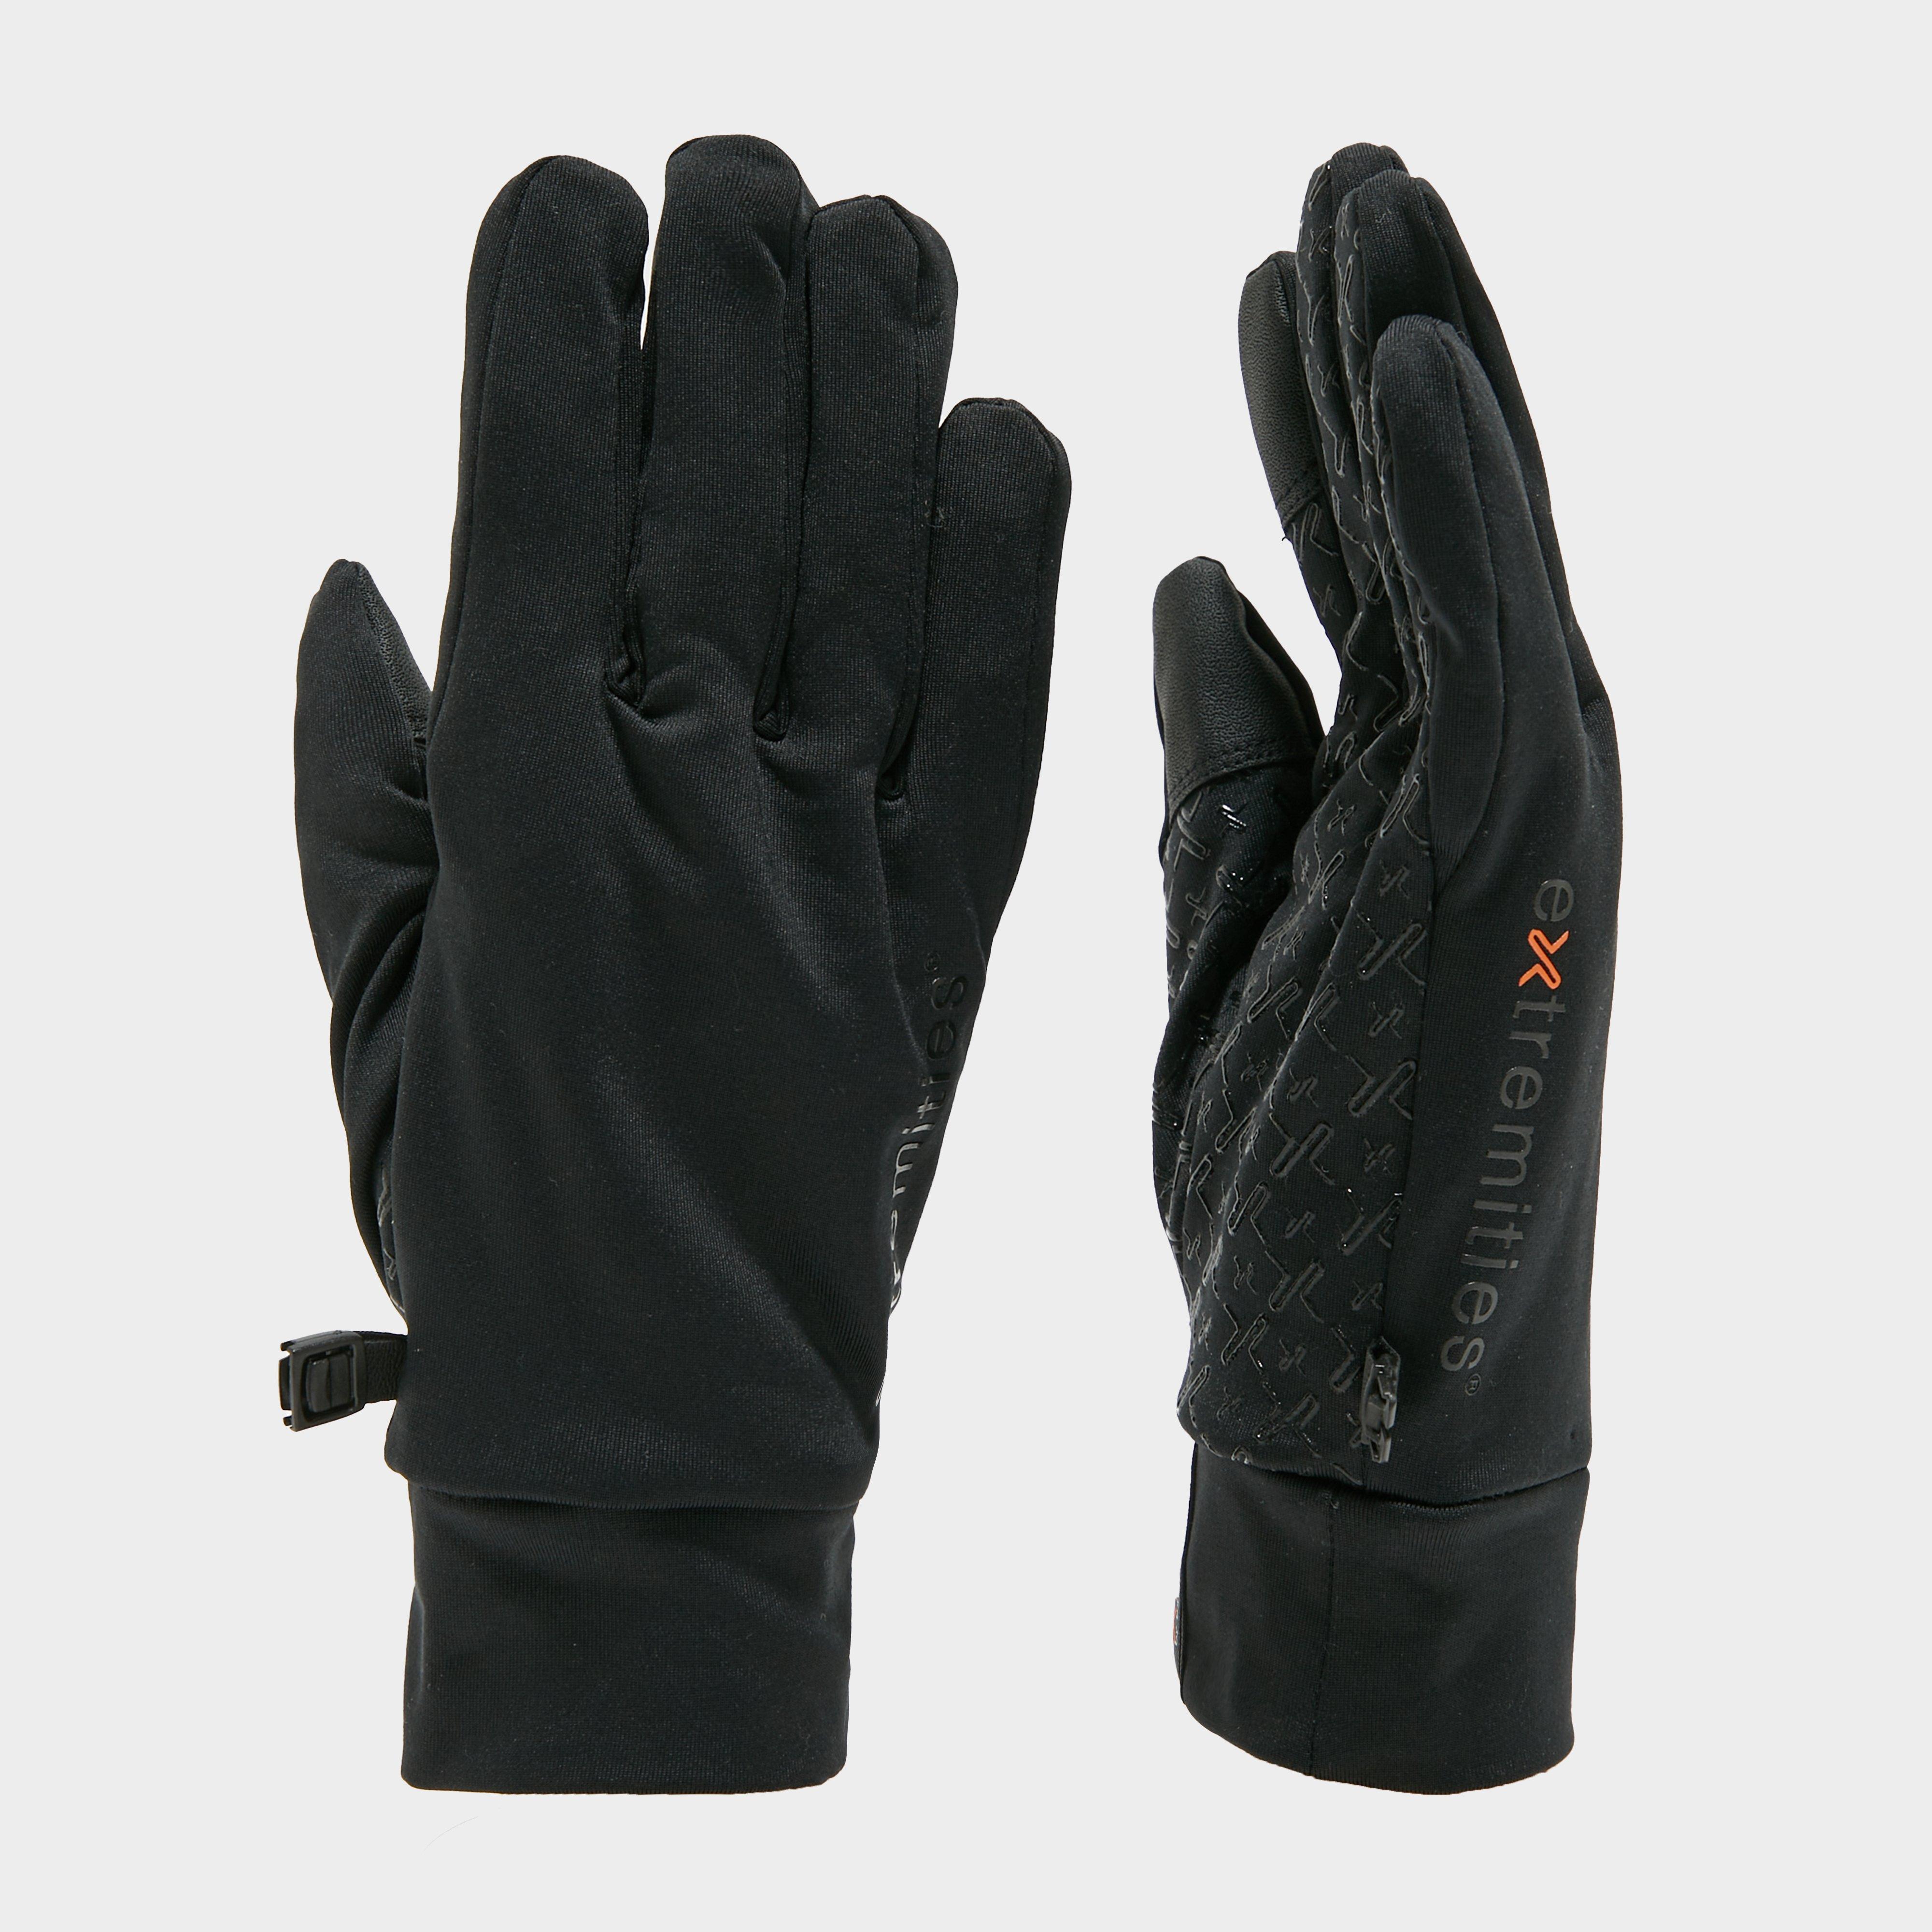 Altura Merino Liner Gloves Review